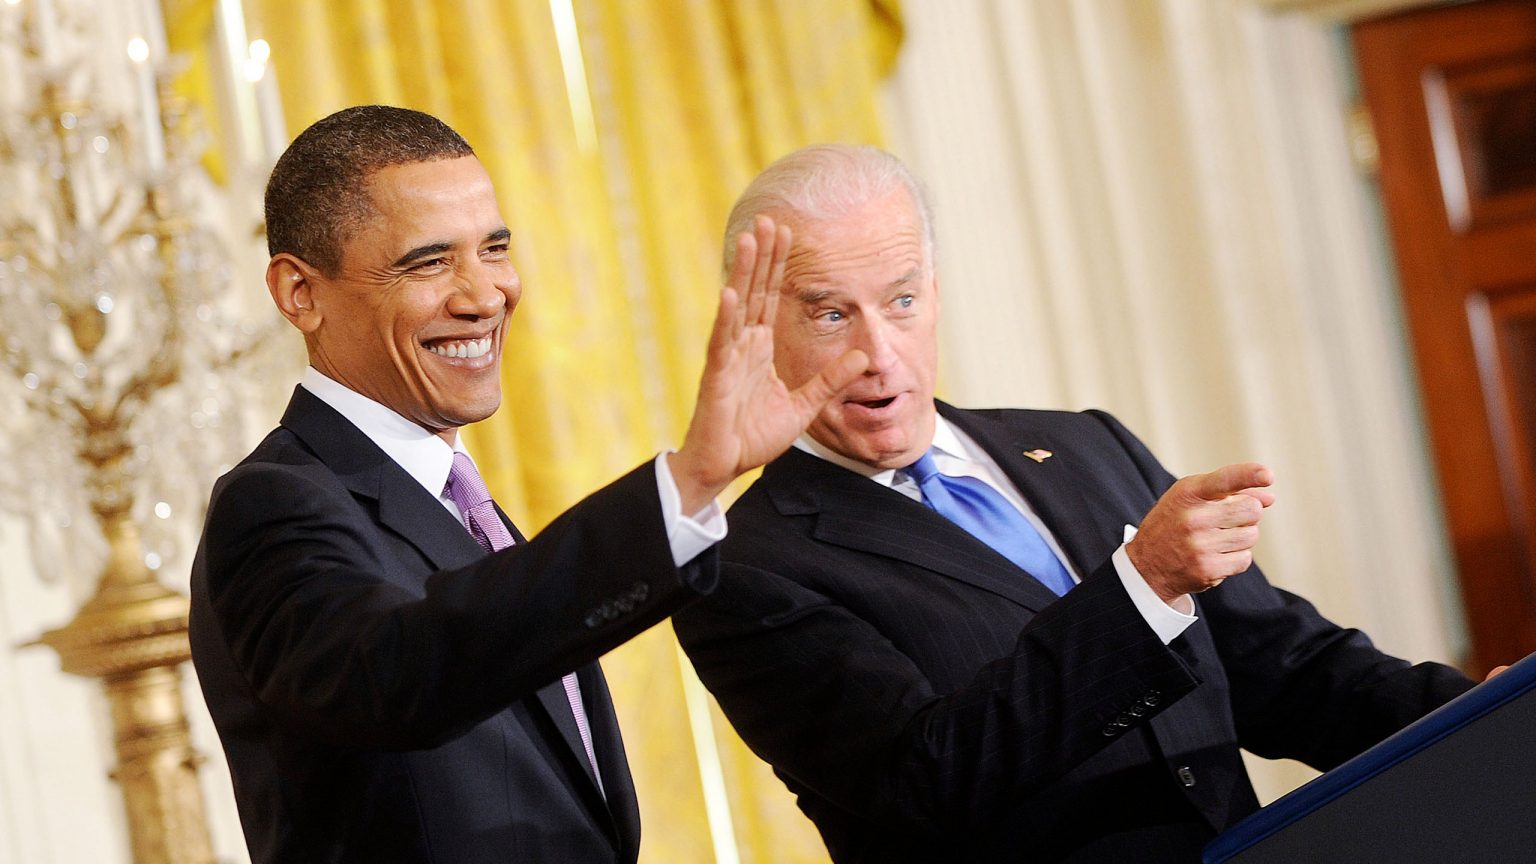 Obama Congratulates Biden, Harris After Election Win